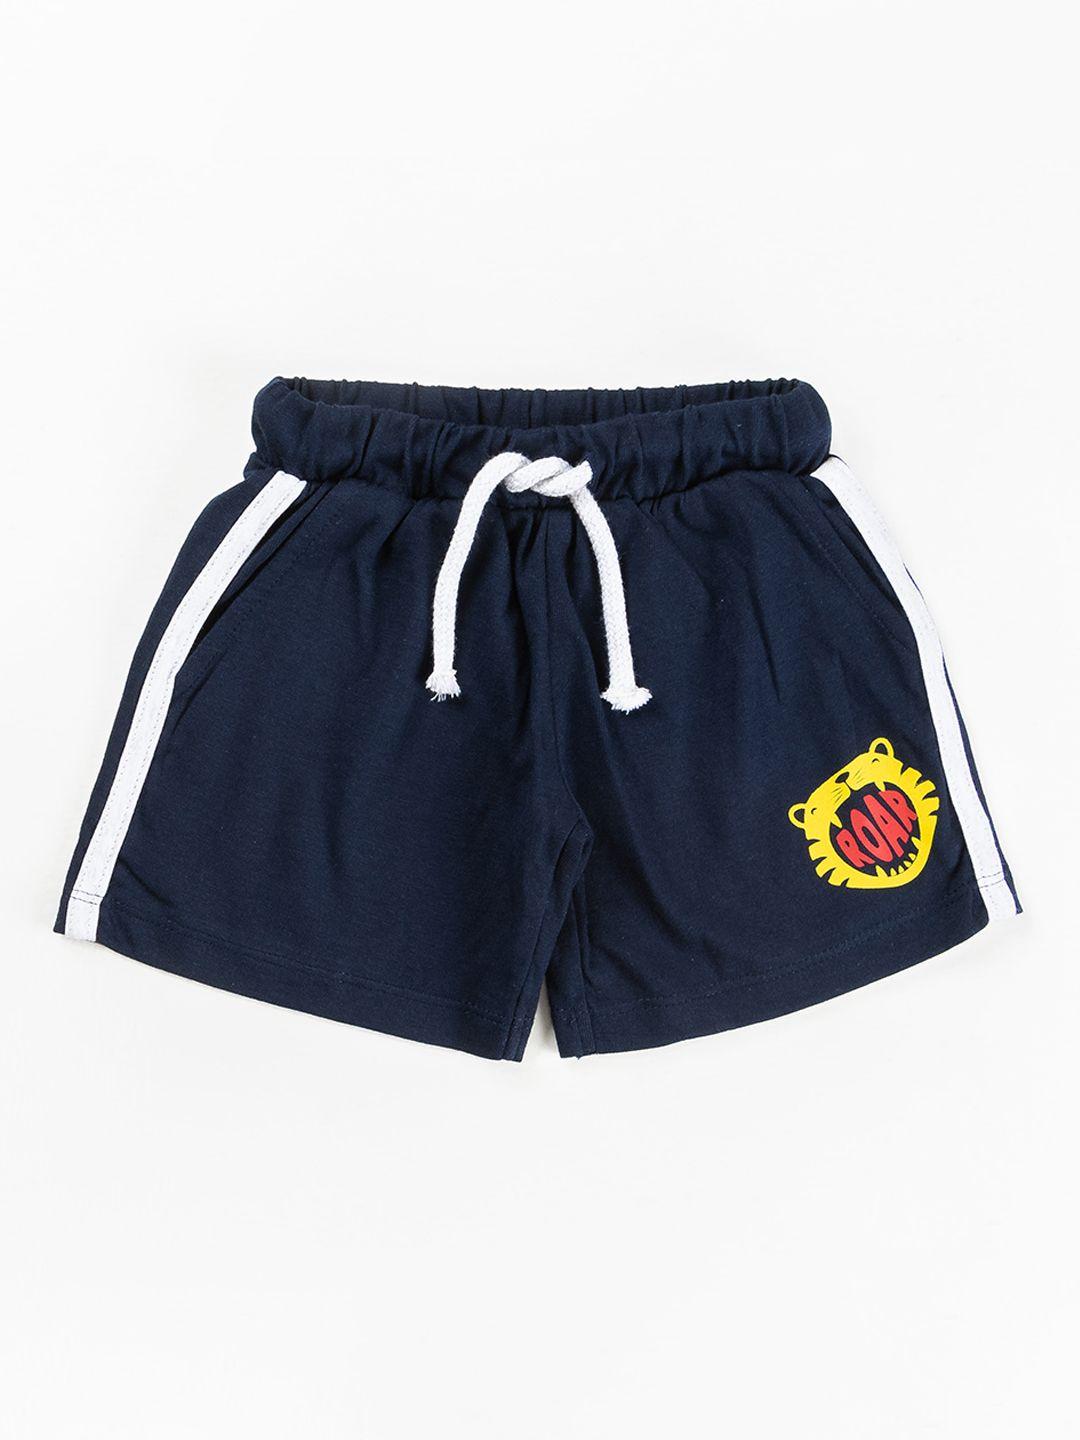 juscubs boys navy blue outdoor shorts